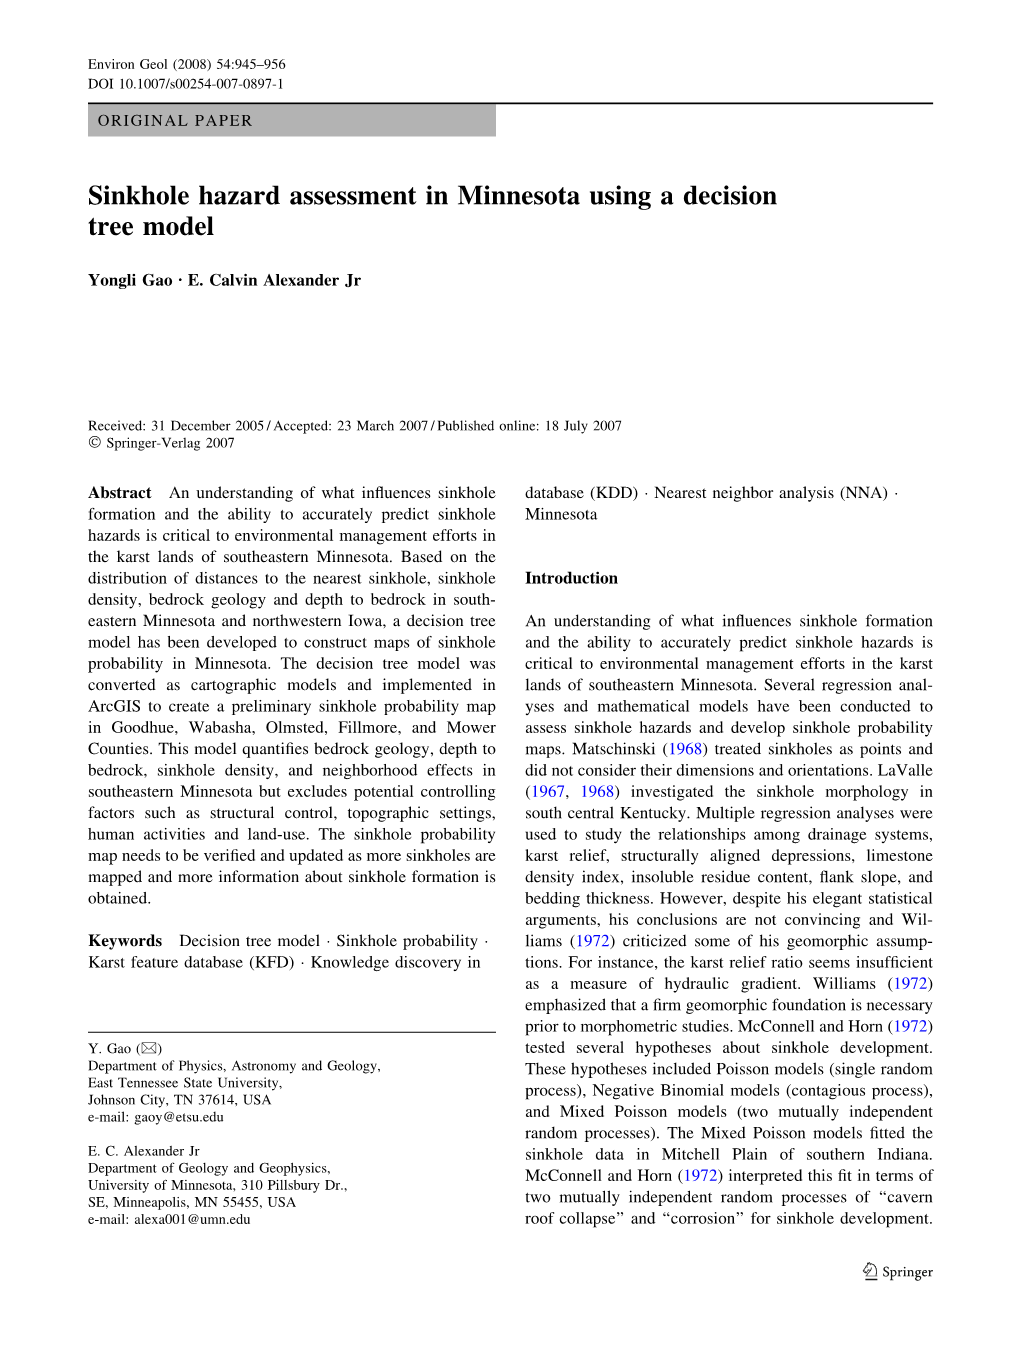 Sinkhole Hazard Assessment in Minnesota Using a Decision Tree Model